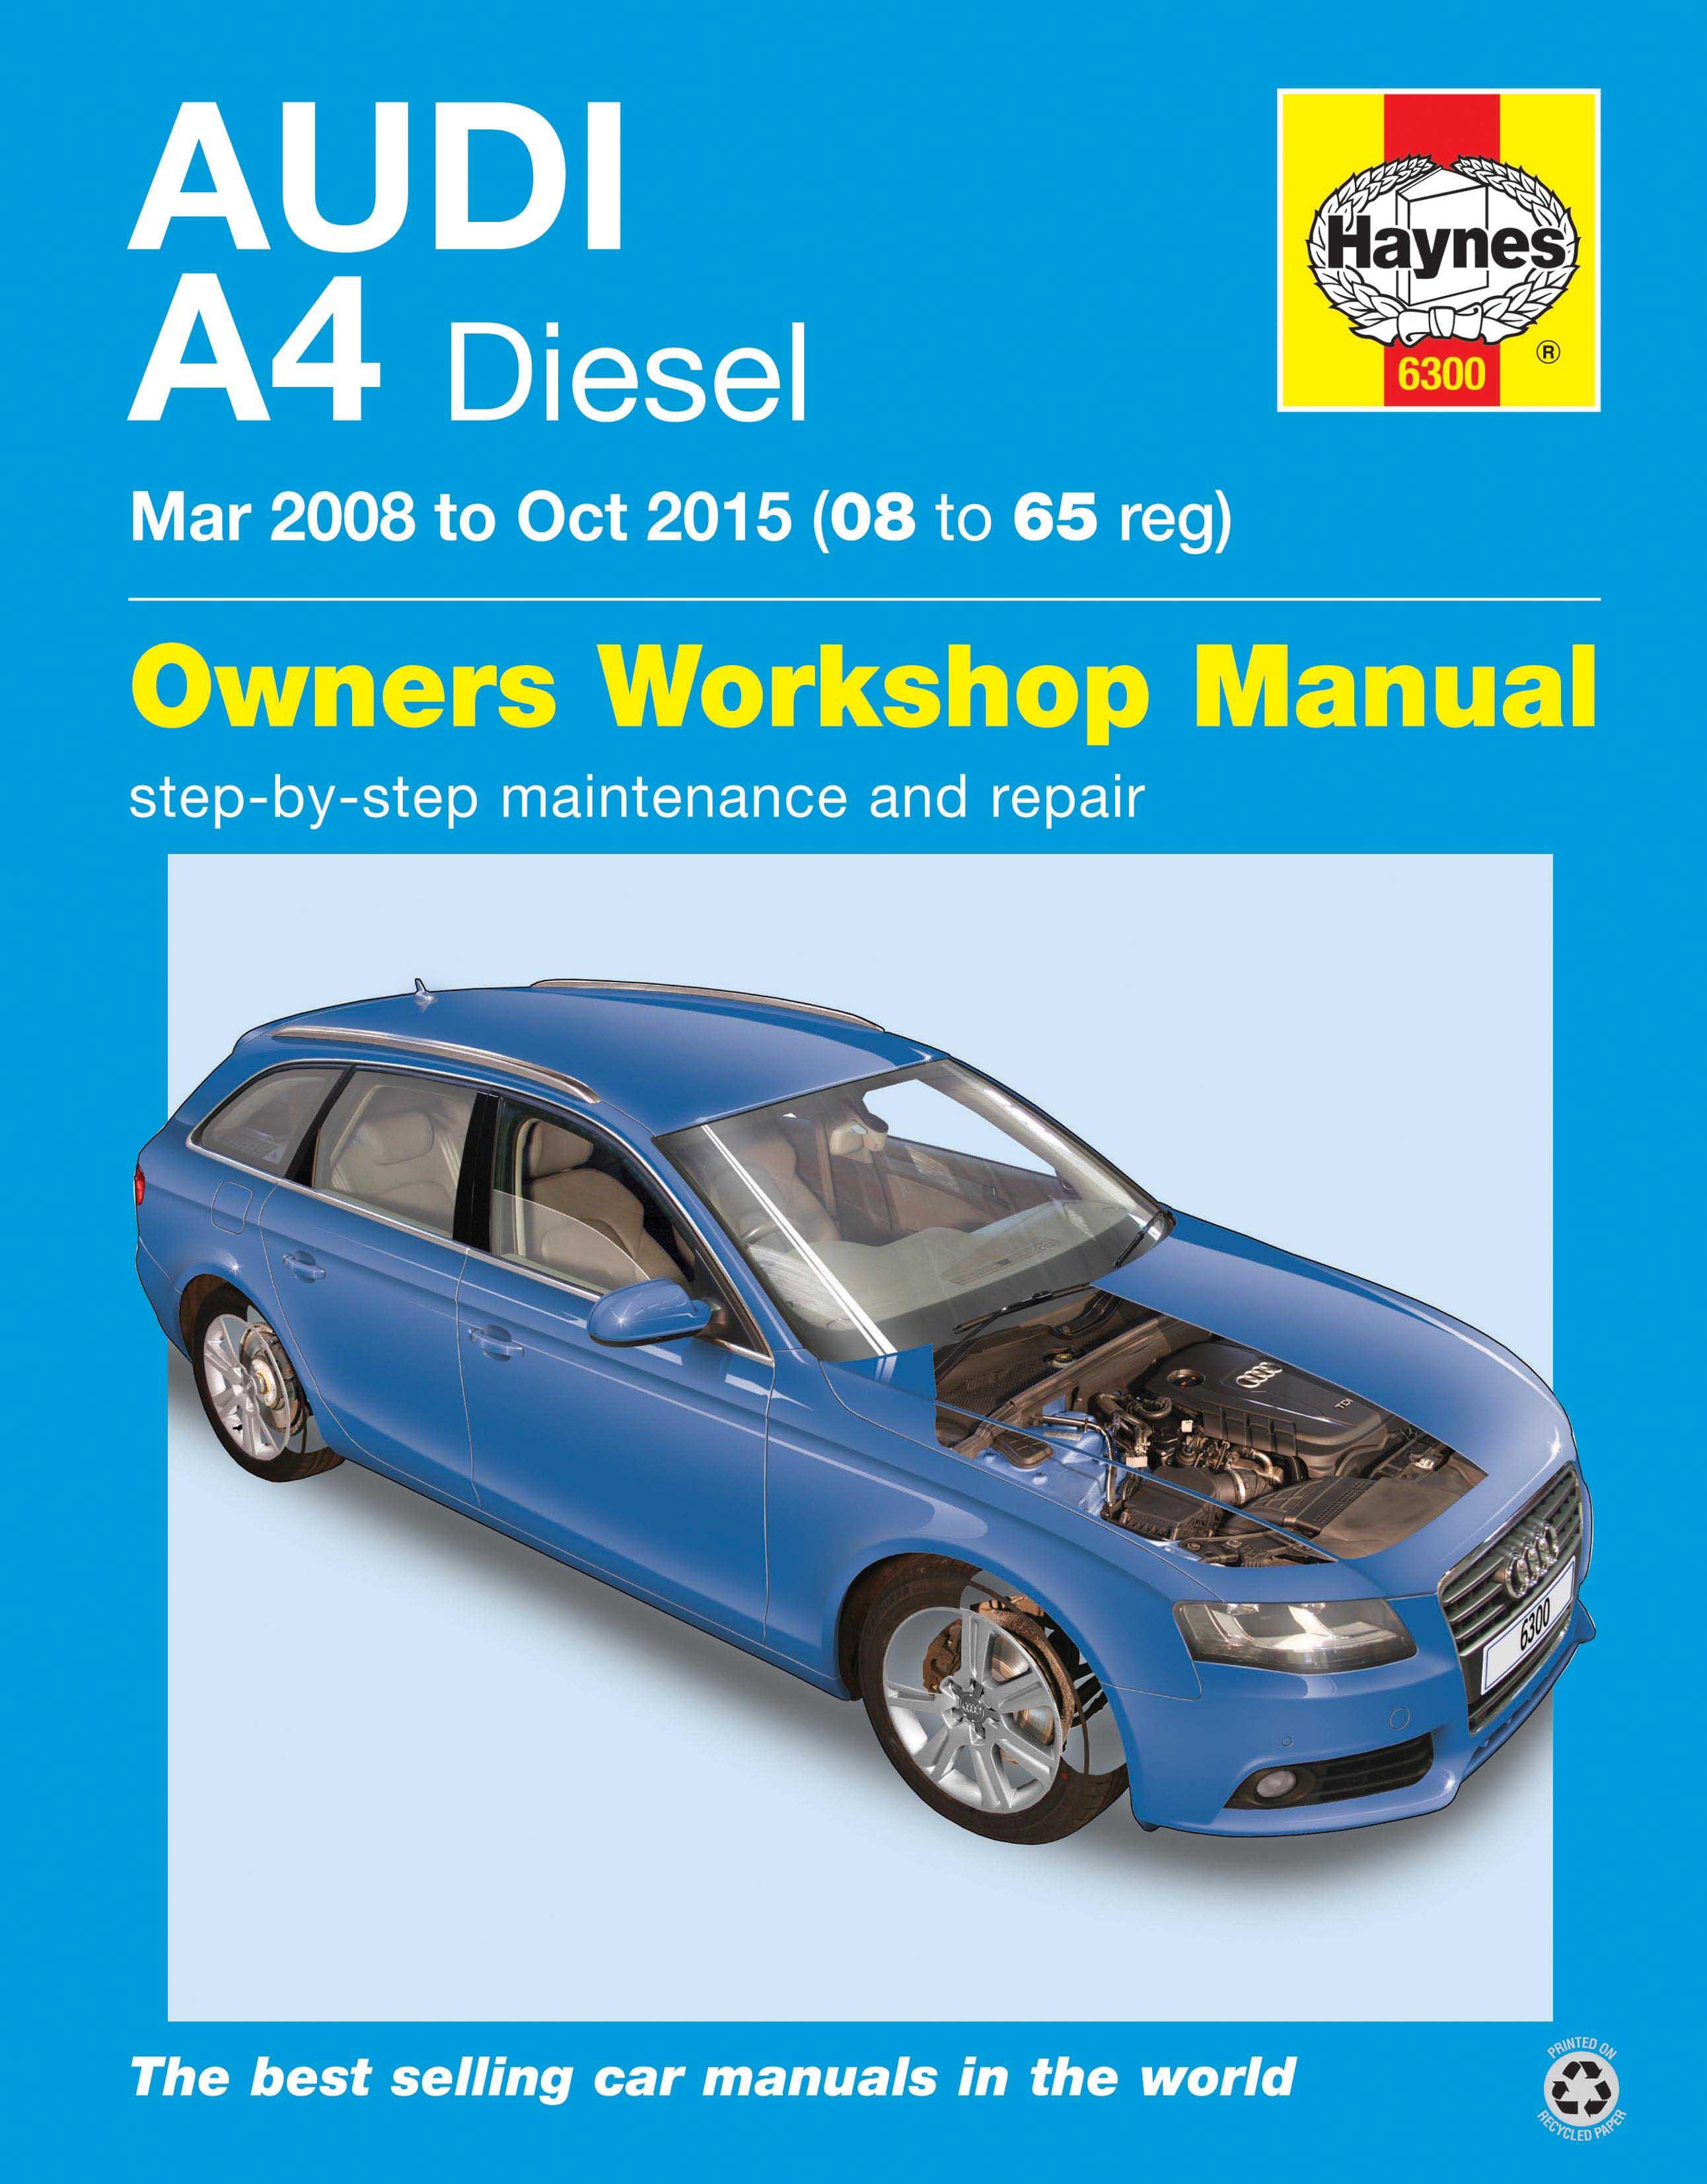 Haynes Audi A4 Diesel (Mar 2008 - Oct 2015) Manual